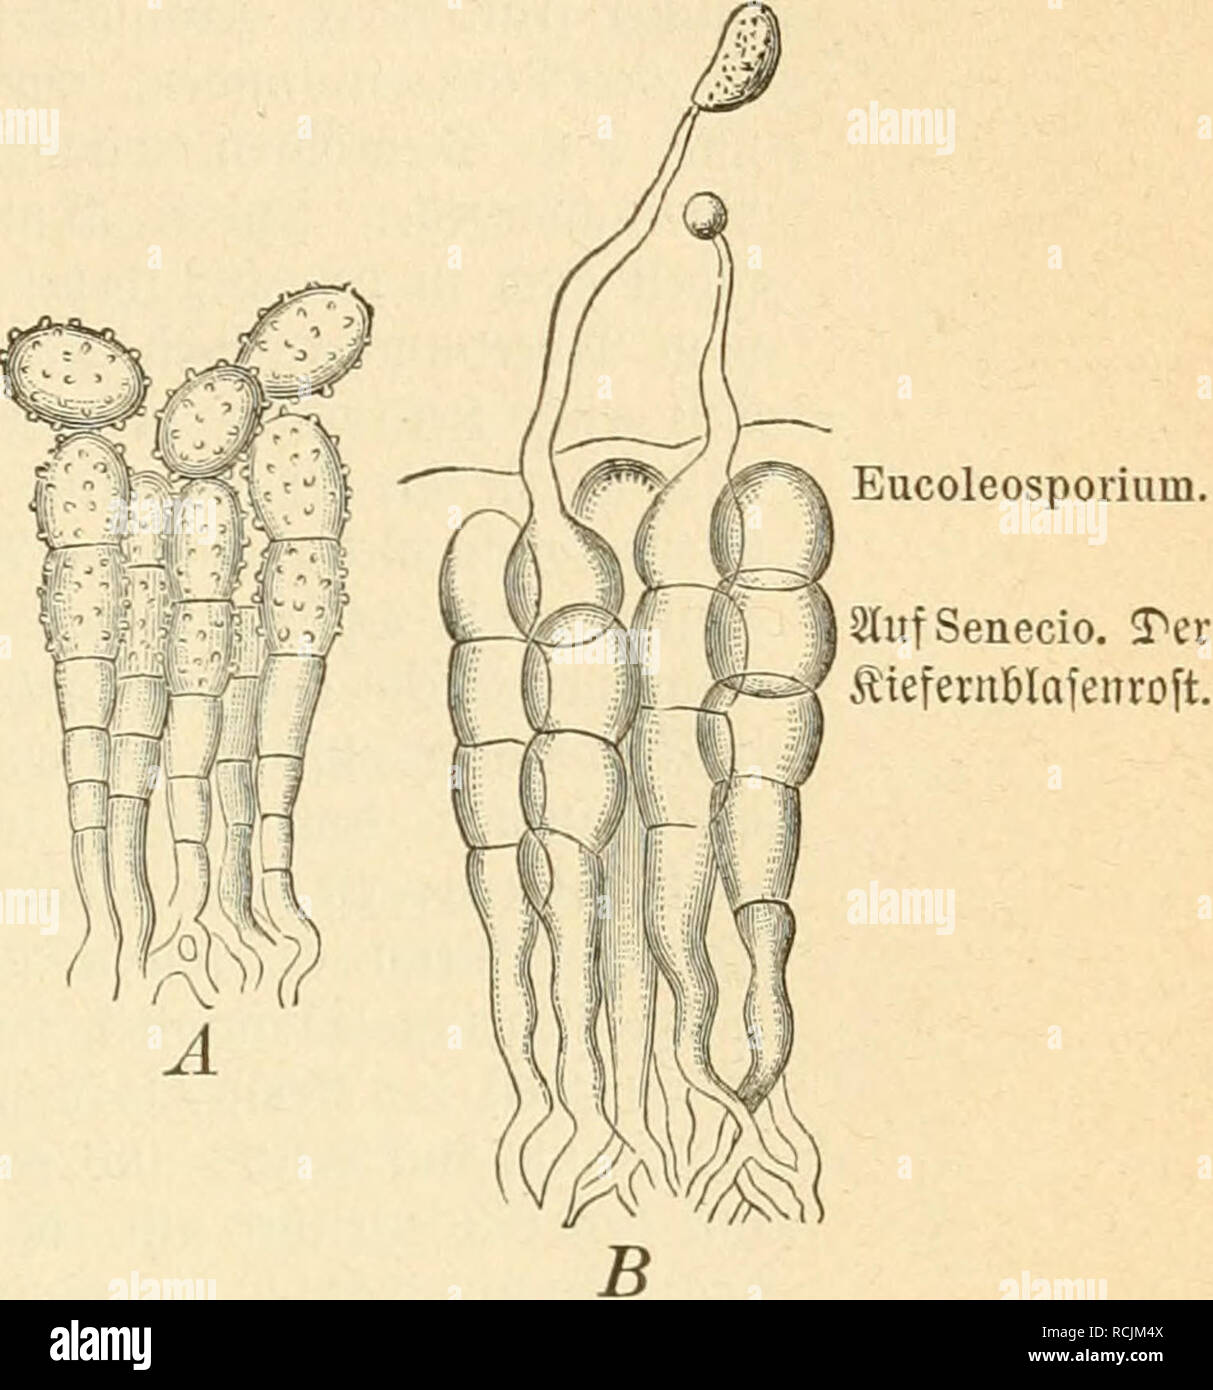 . Die krankheiten der pflanzen, ein handbuch fur land-und forstwirte, gartner, gartenfreunde und botaniker. Plant diseases. S.tapttd: afiüitpi(5c (UiOLiiiiacceii) a[§ Urfad)e ba 3Roftfranff)oitcn 193 5. Coleosporium Synantherarum Fr. (Coleosporium Sonchi siuf (jompoiiteu. Winter), auf Dielcit SoHipüfiten, befouberä I)äuftc3 auf Tussilago farfara, Petasites-Slvten, Adenostyles, Inula-2trten, Cacalia, Sonchus-Stften, Cine- raria itnb geiüiffeil 9(rteu uon Senecio, inie Senecio neniorensis, subal- pinus, cordatus, aquaticus, nebrodensis wwb saiacenicus, luäljfeilb bie auf Senecio vulgaris uub ner Stock Photo